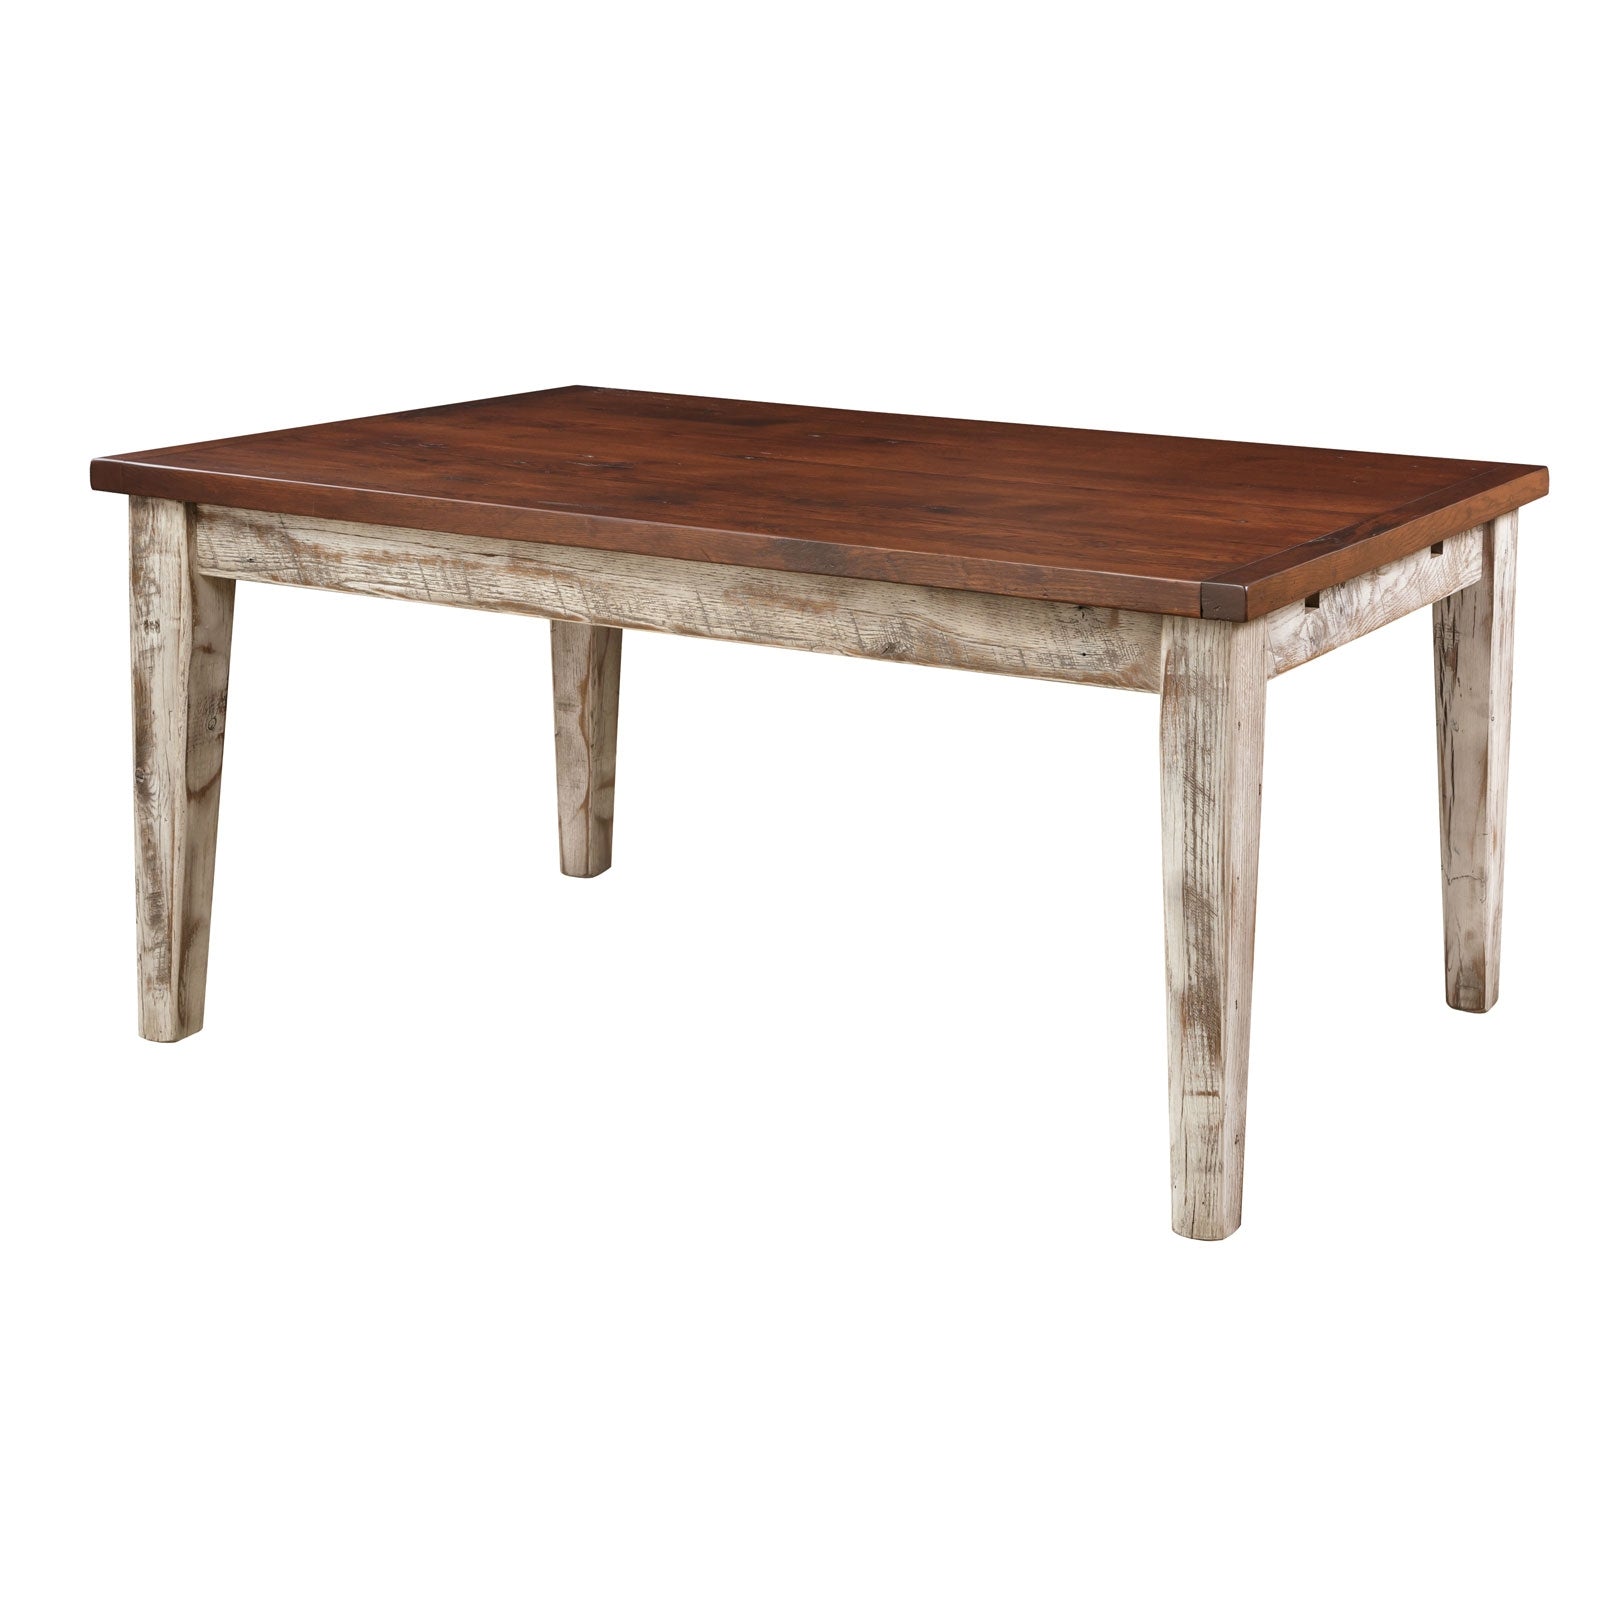 Carbondale Farm Table Set - Quickship - snyders.furniture